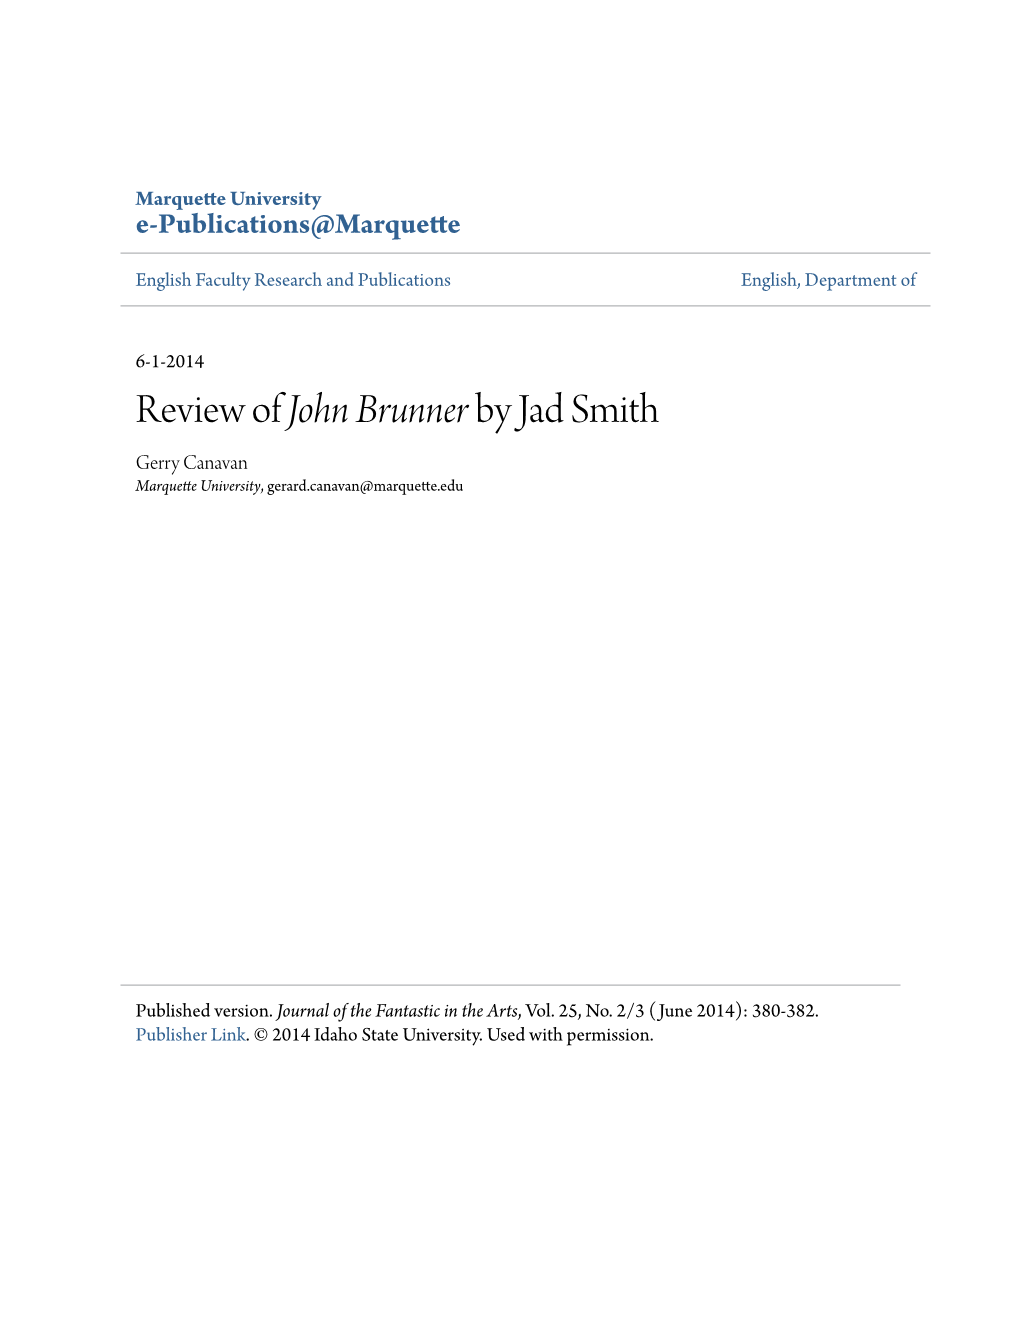 Review of John Brunner by Jad Smith Gerry Canavan Marquette University, Gerard.Canavan@Marquette.Edu